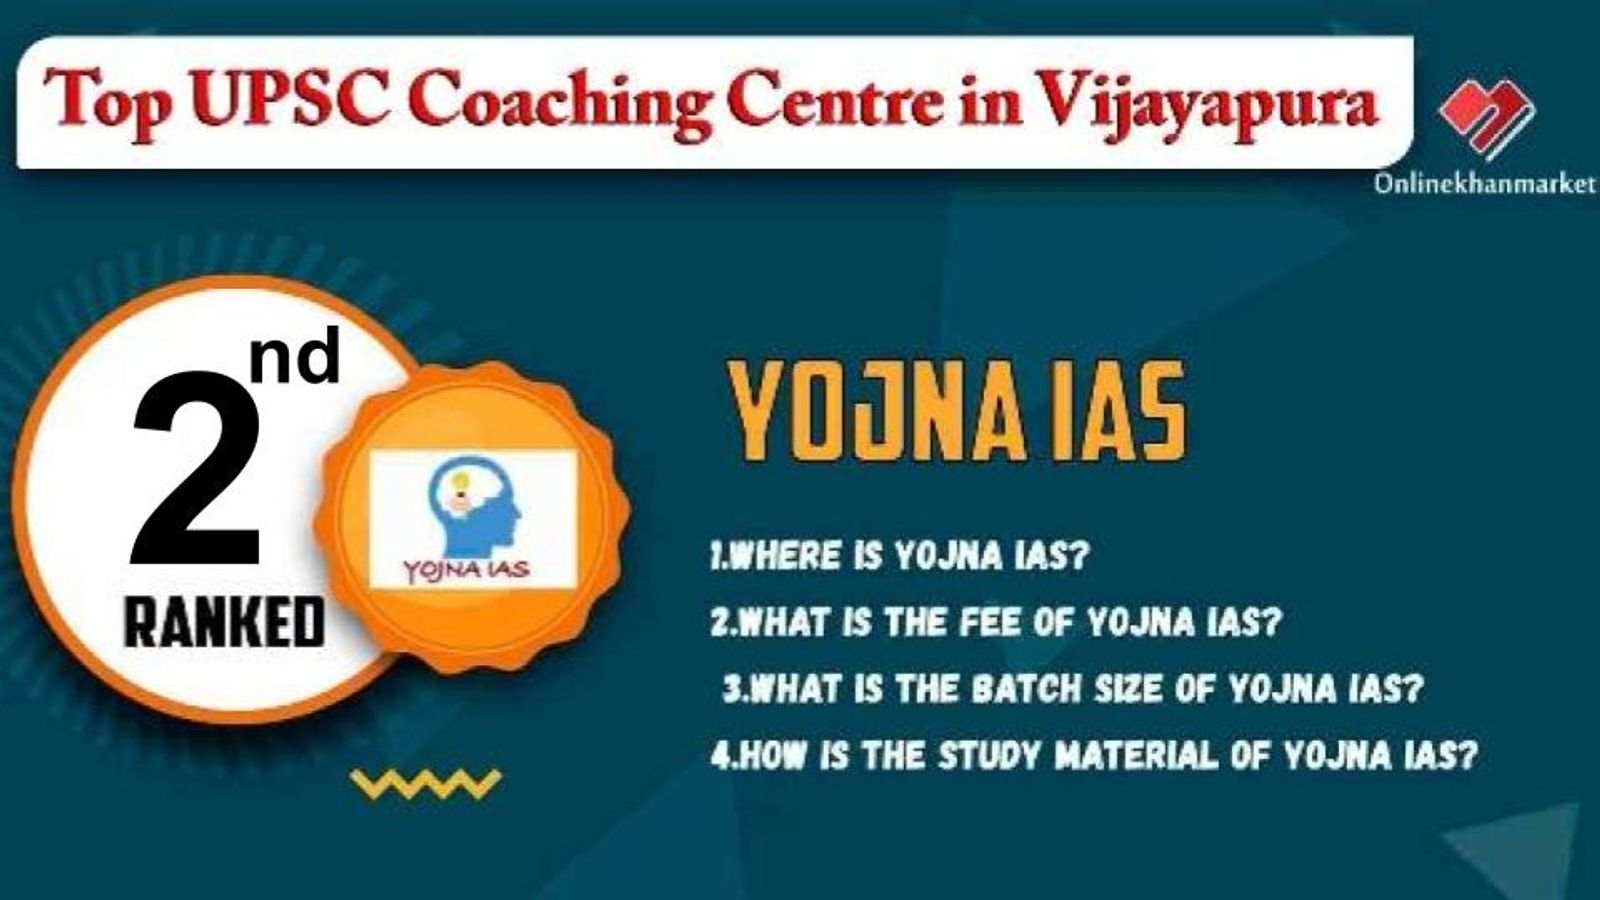 Top IAS Coaching in Vijayapura